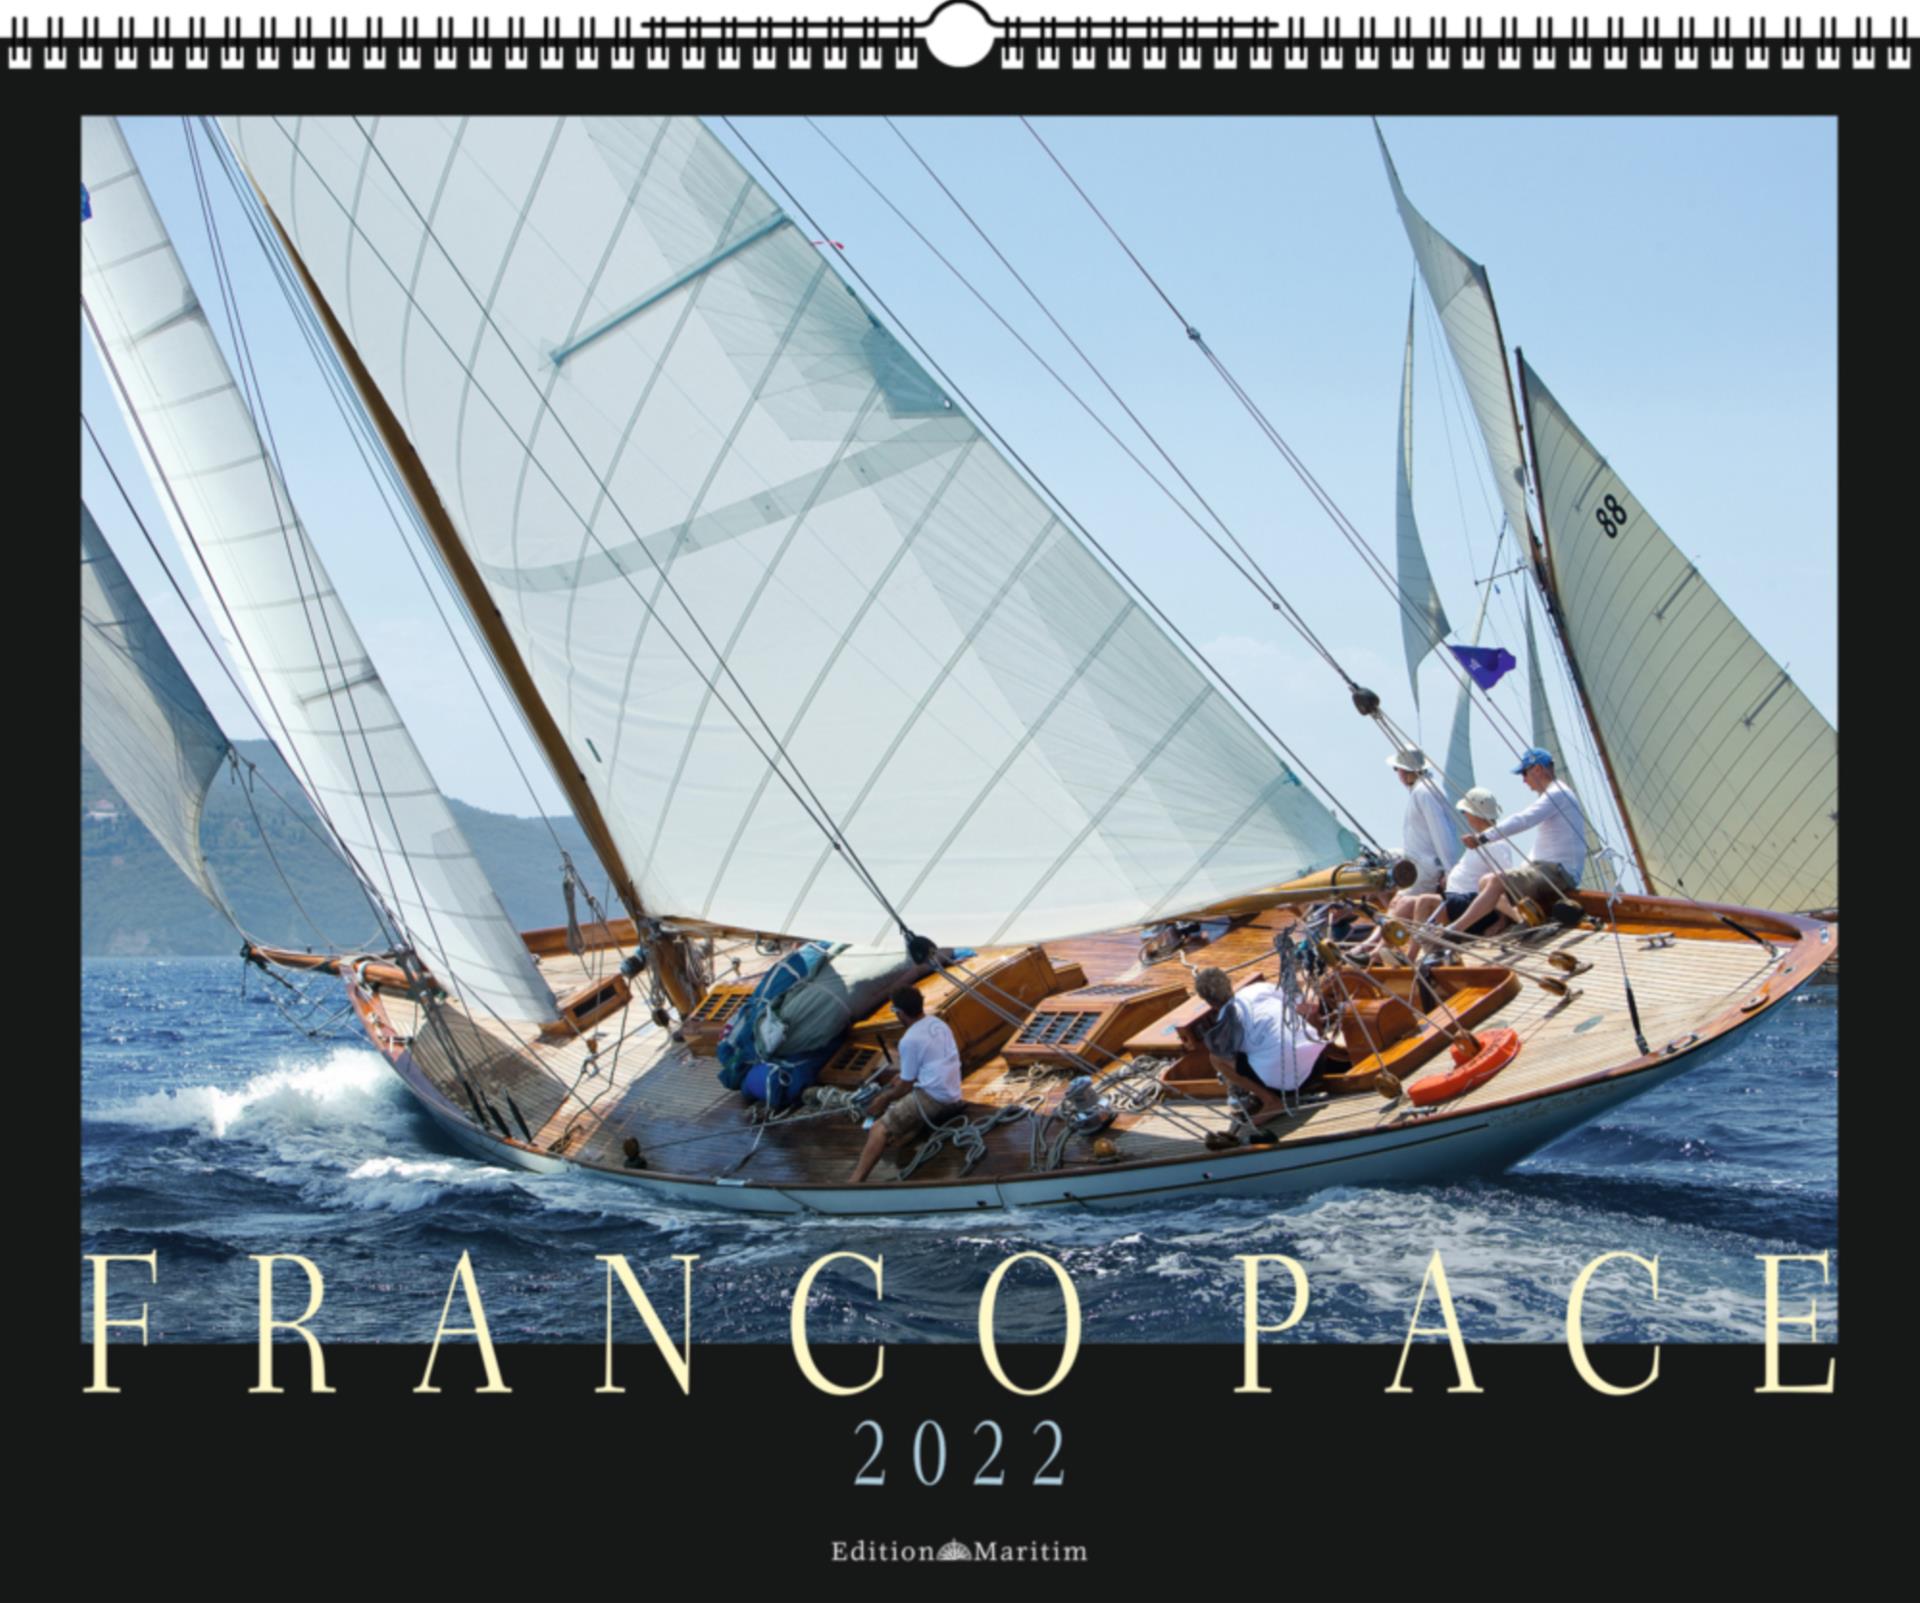 Franco Pace 2022 